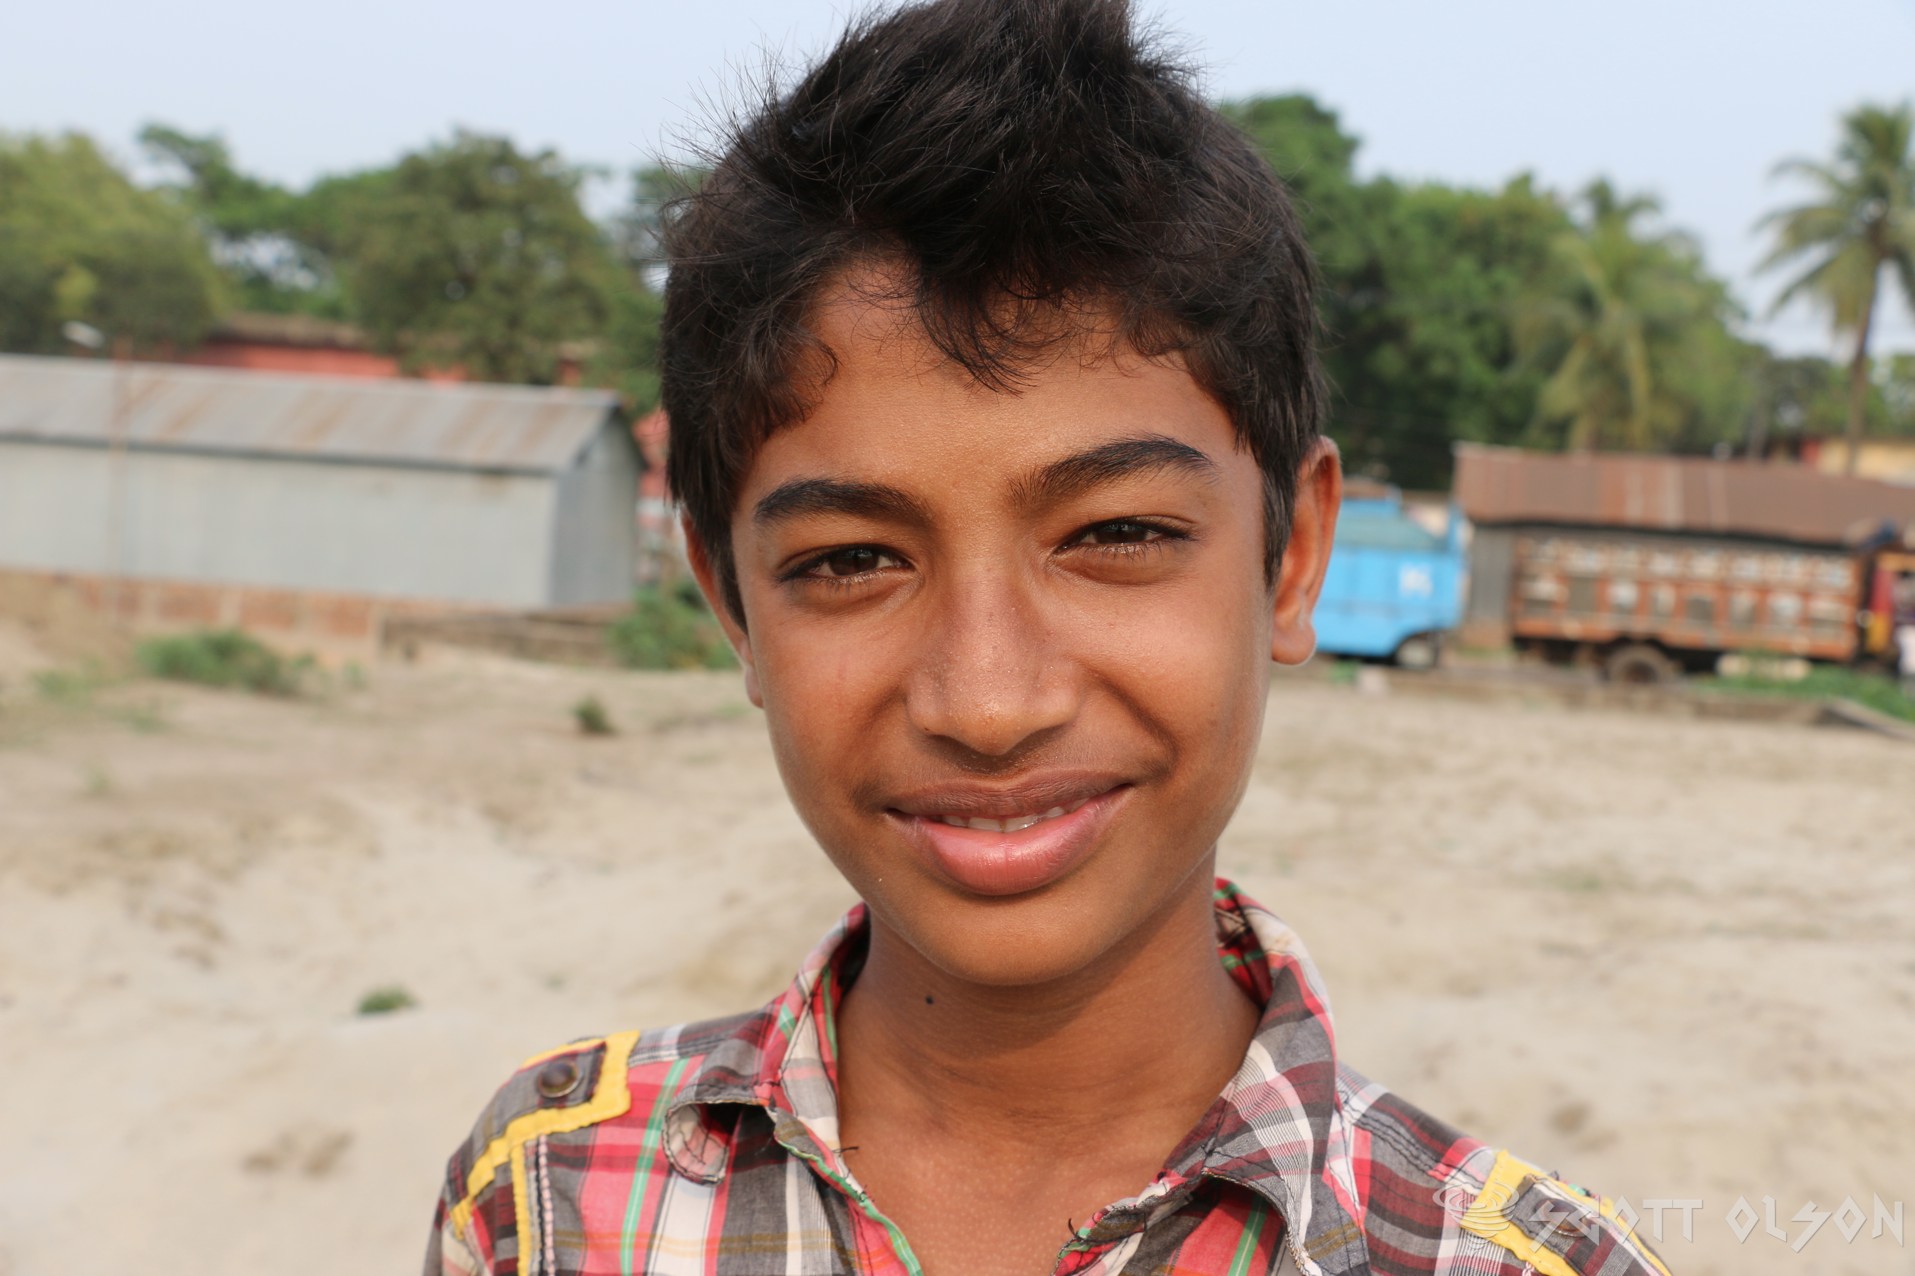 happy-children-bangladesh-smiles